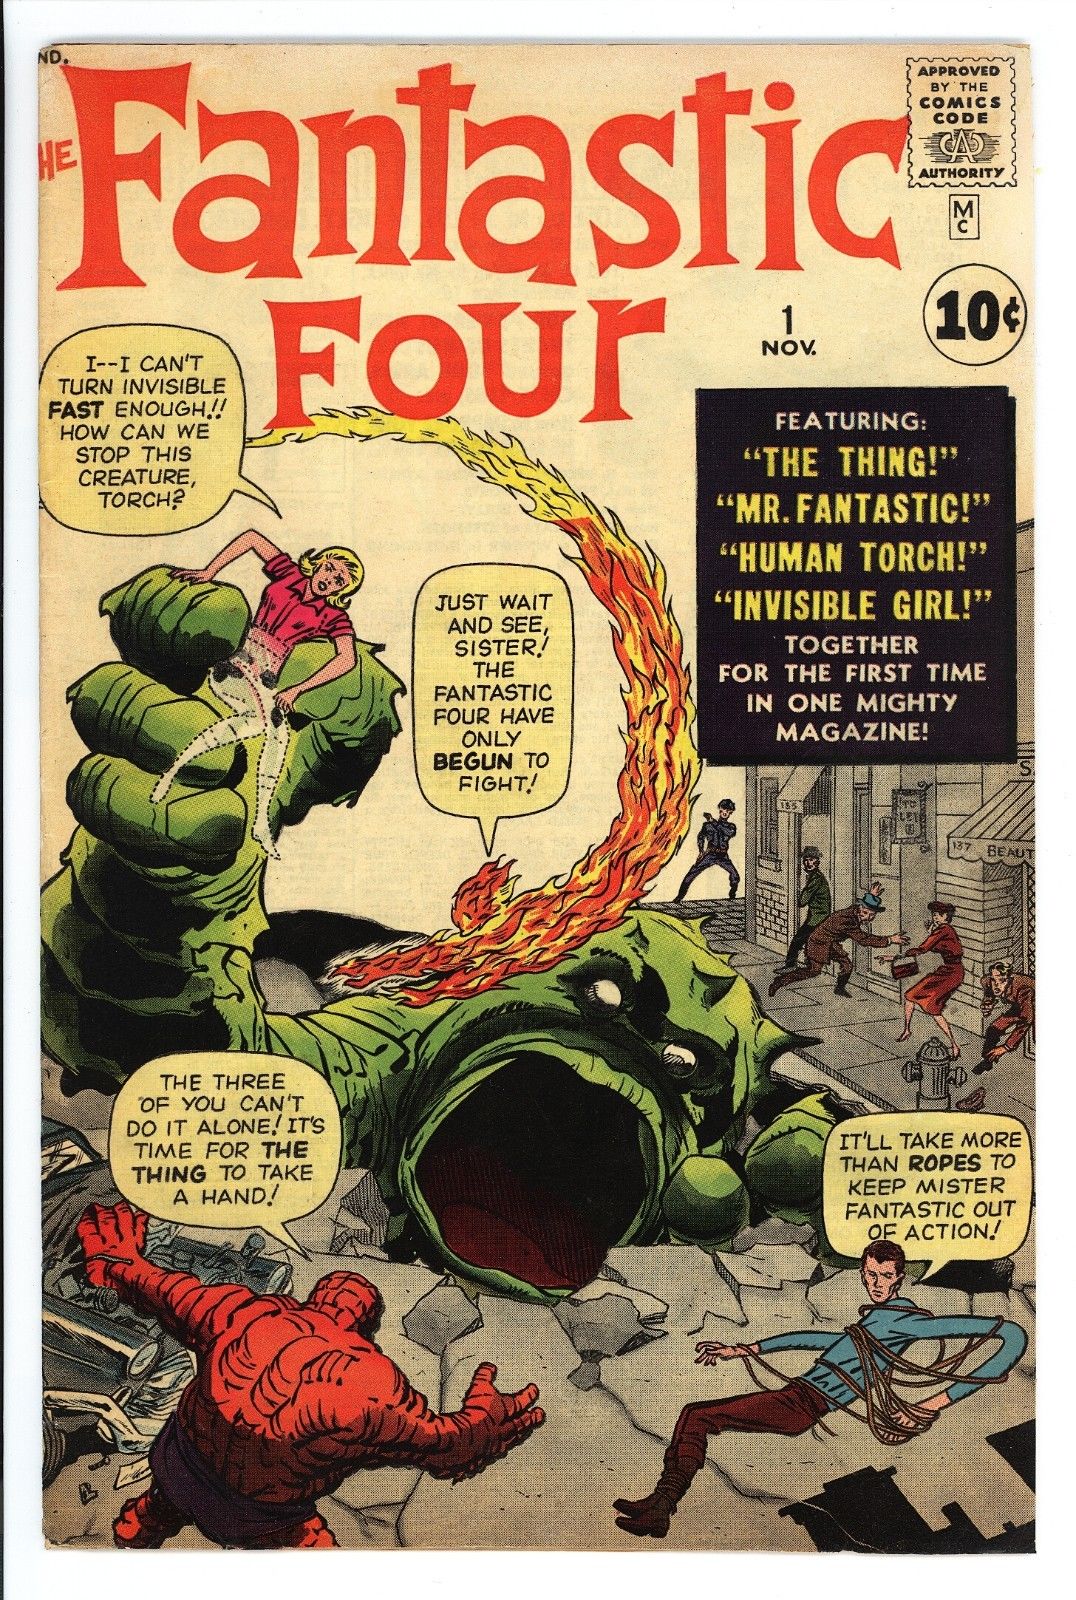 Fantastic Four #1 Vol 1 Super High Grade 1st App of Fantastic Four Original 1961